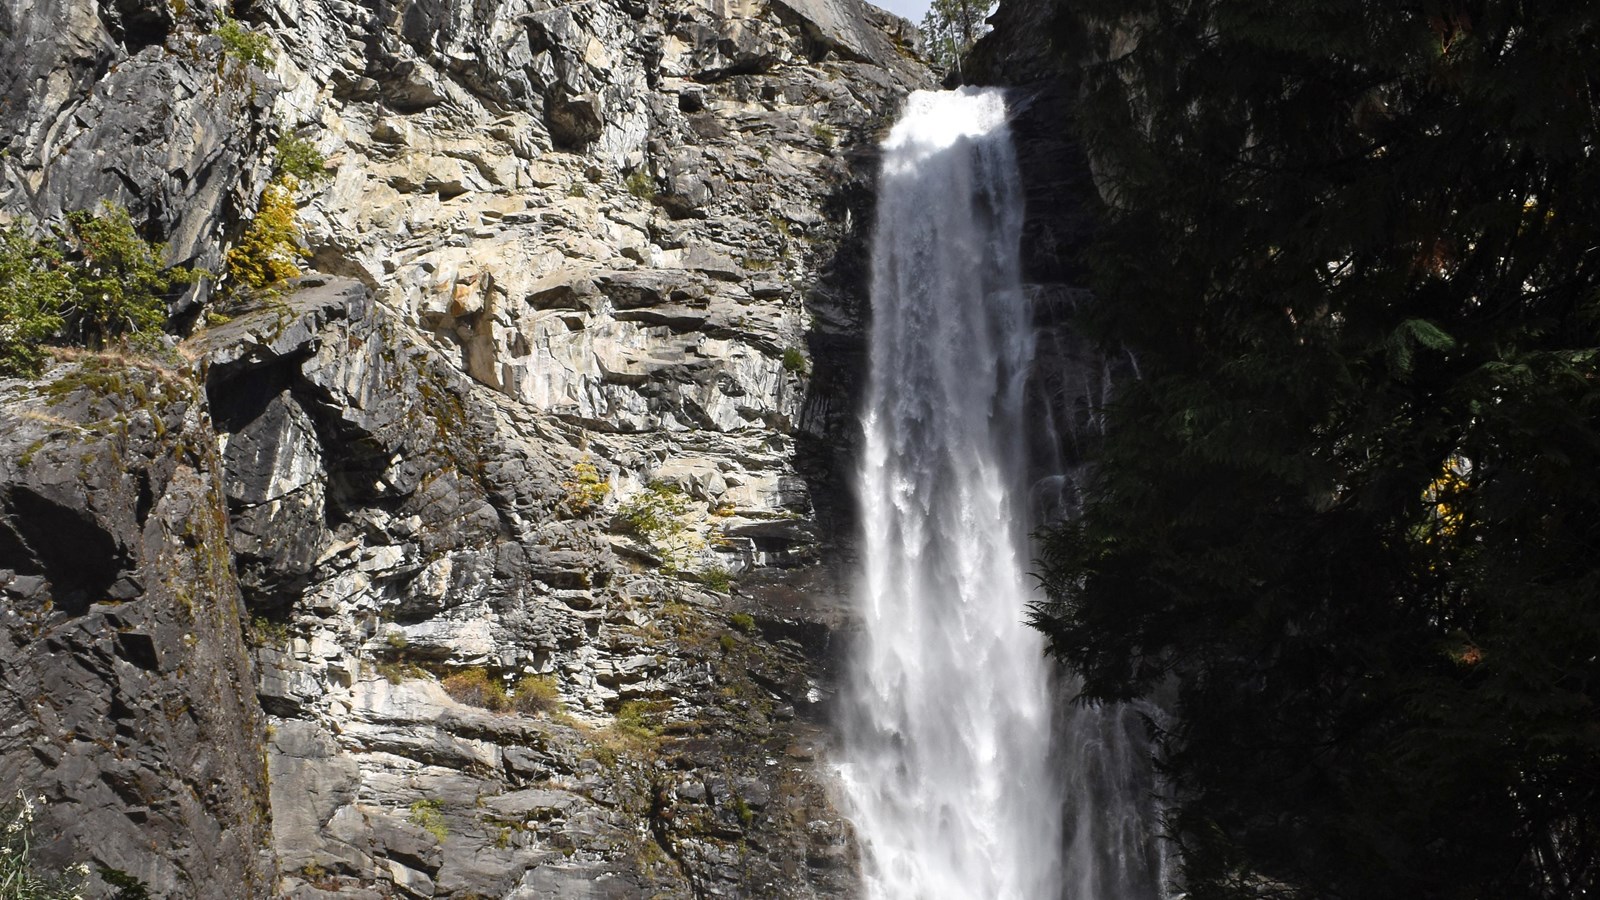 A thin waterfall drops down a gray cliff face.